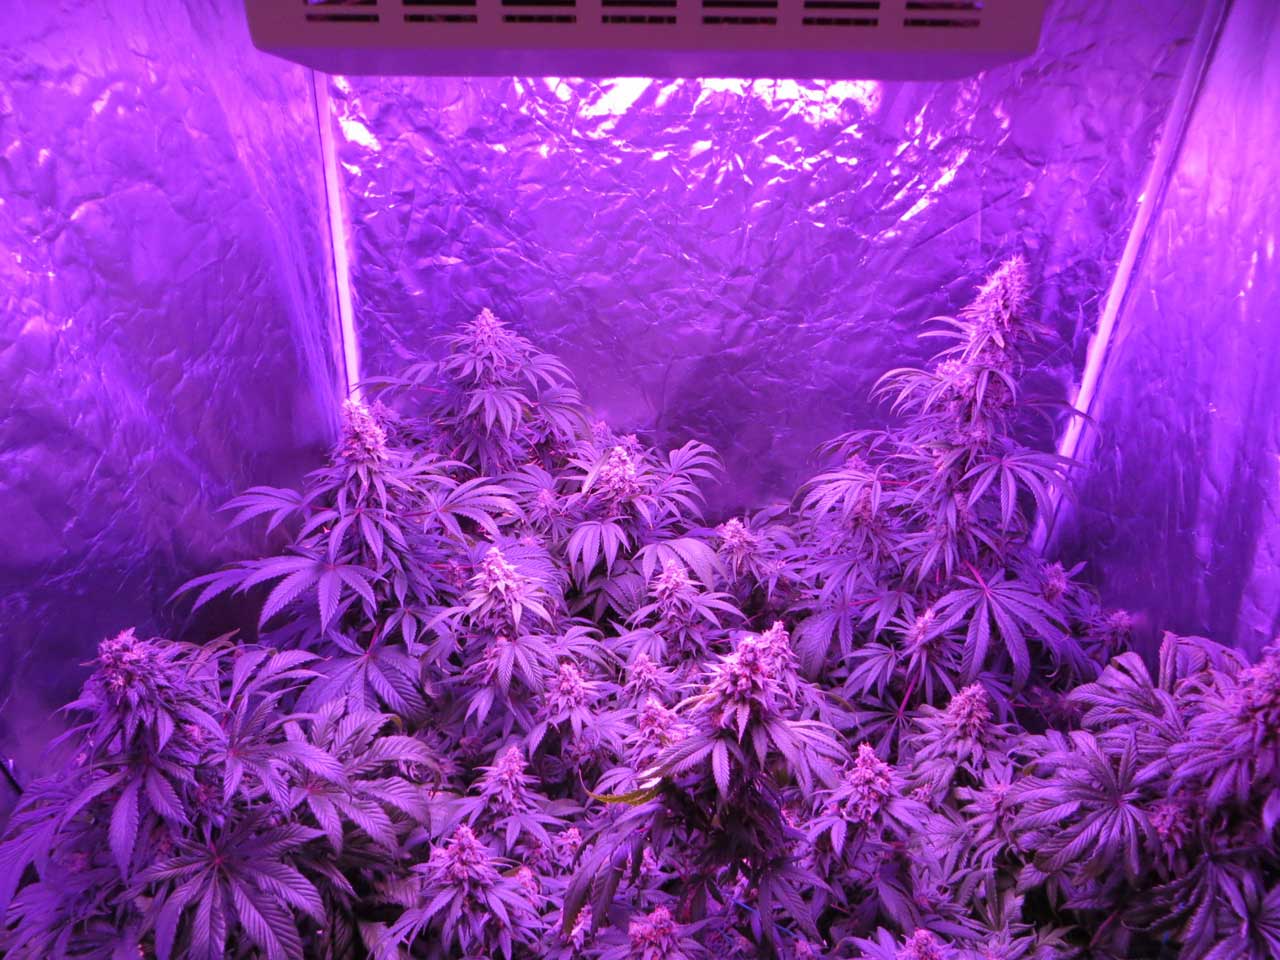 How Far Should Grow Lights be From Cannabis Plants? | Grow ...